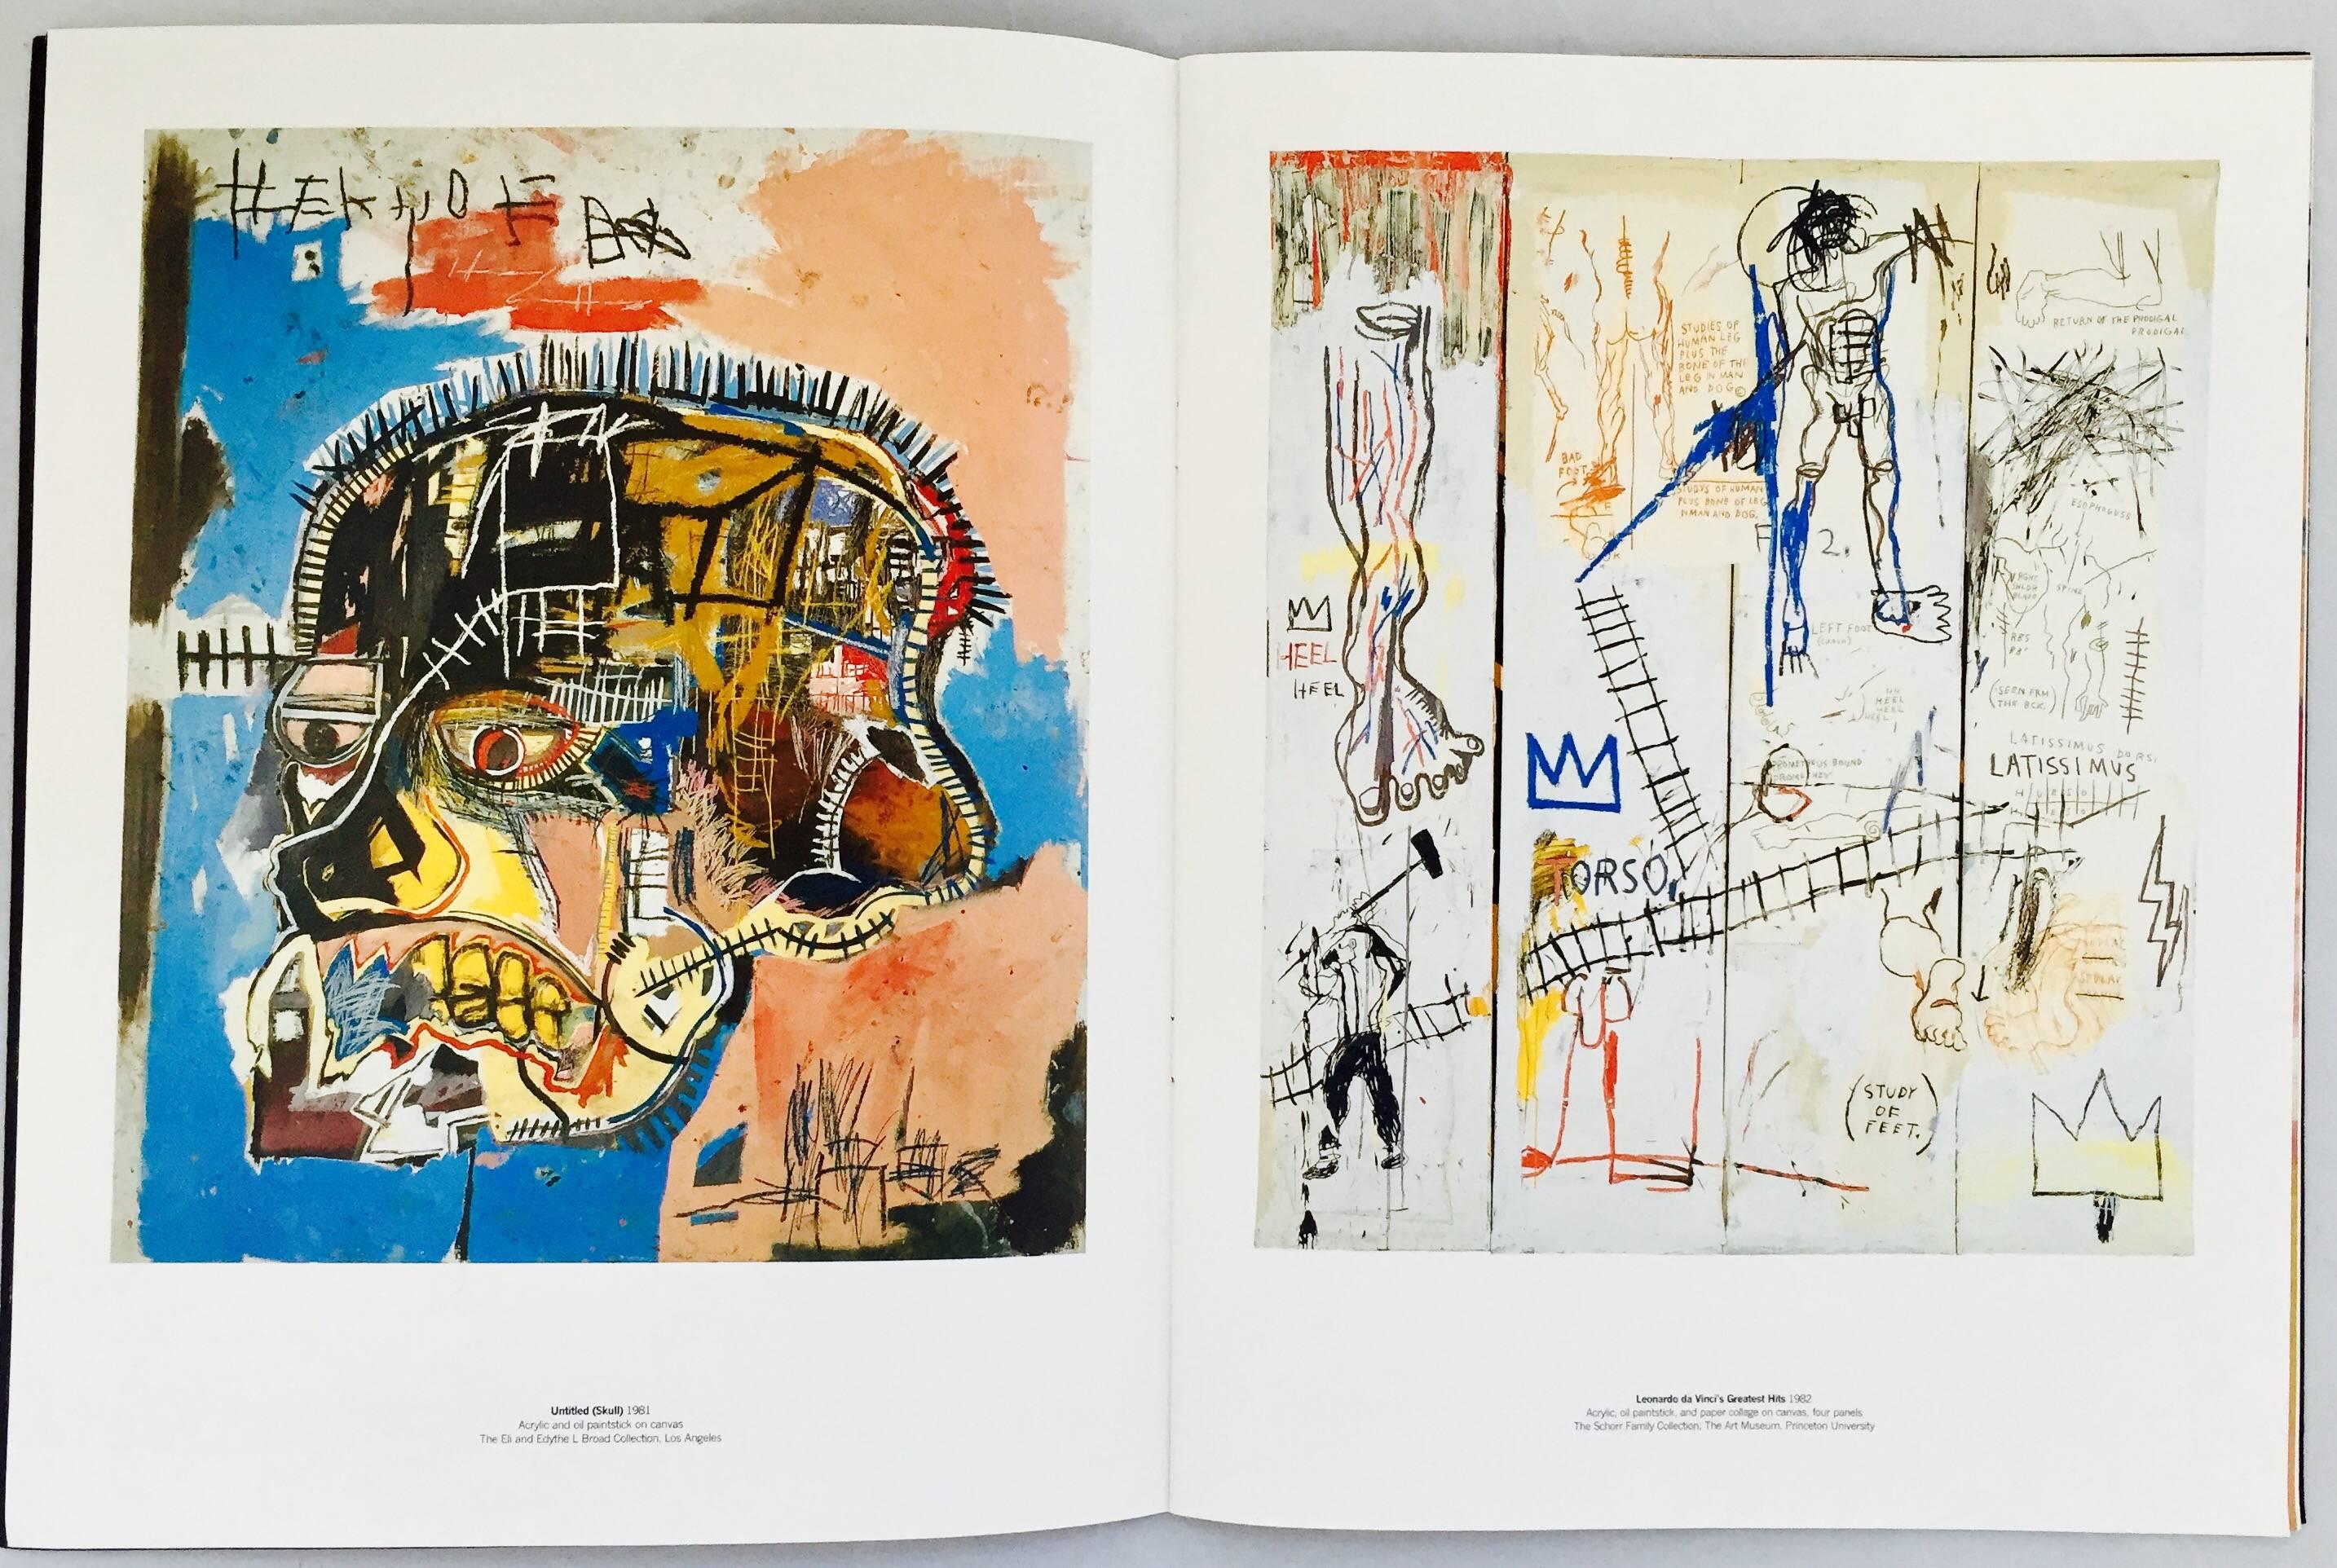 Basquiat at Serpentine Gallery, London (Exhibition Catalogue) - Pop Art Art by (after) Jean-Michel Basquiat